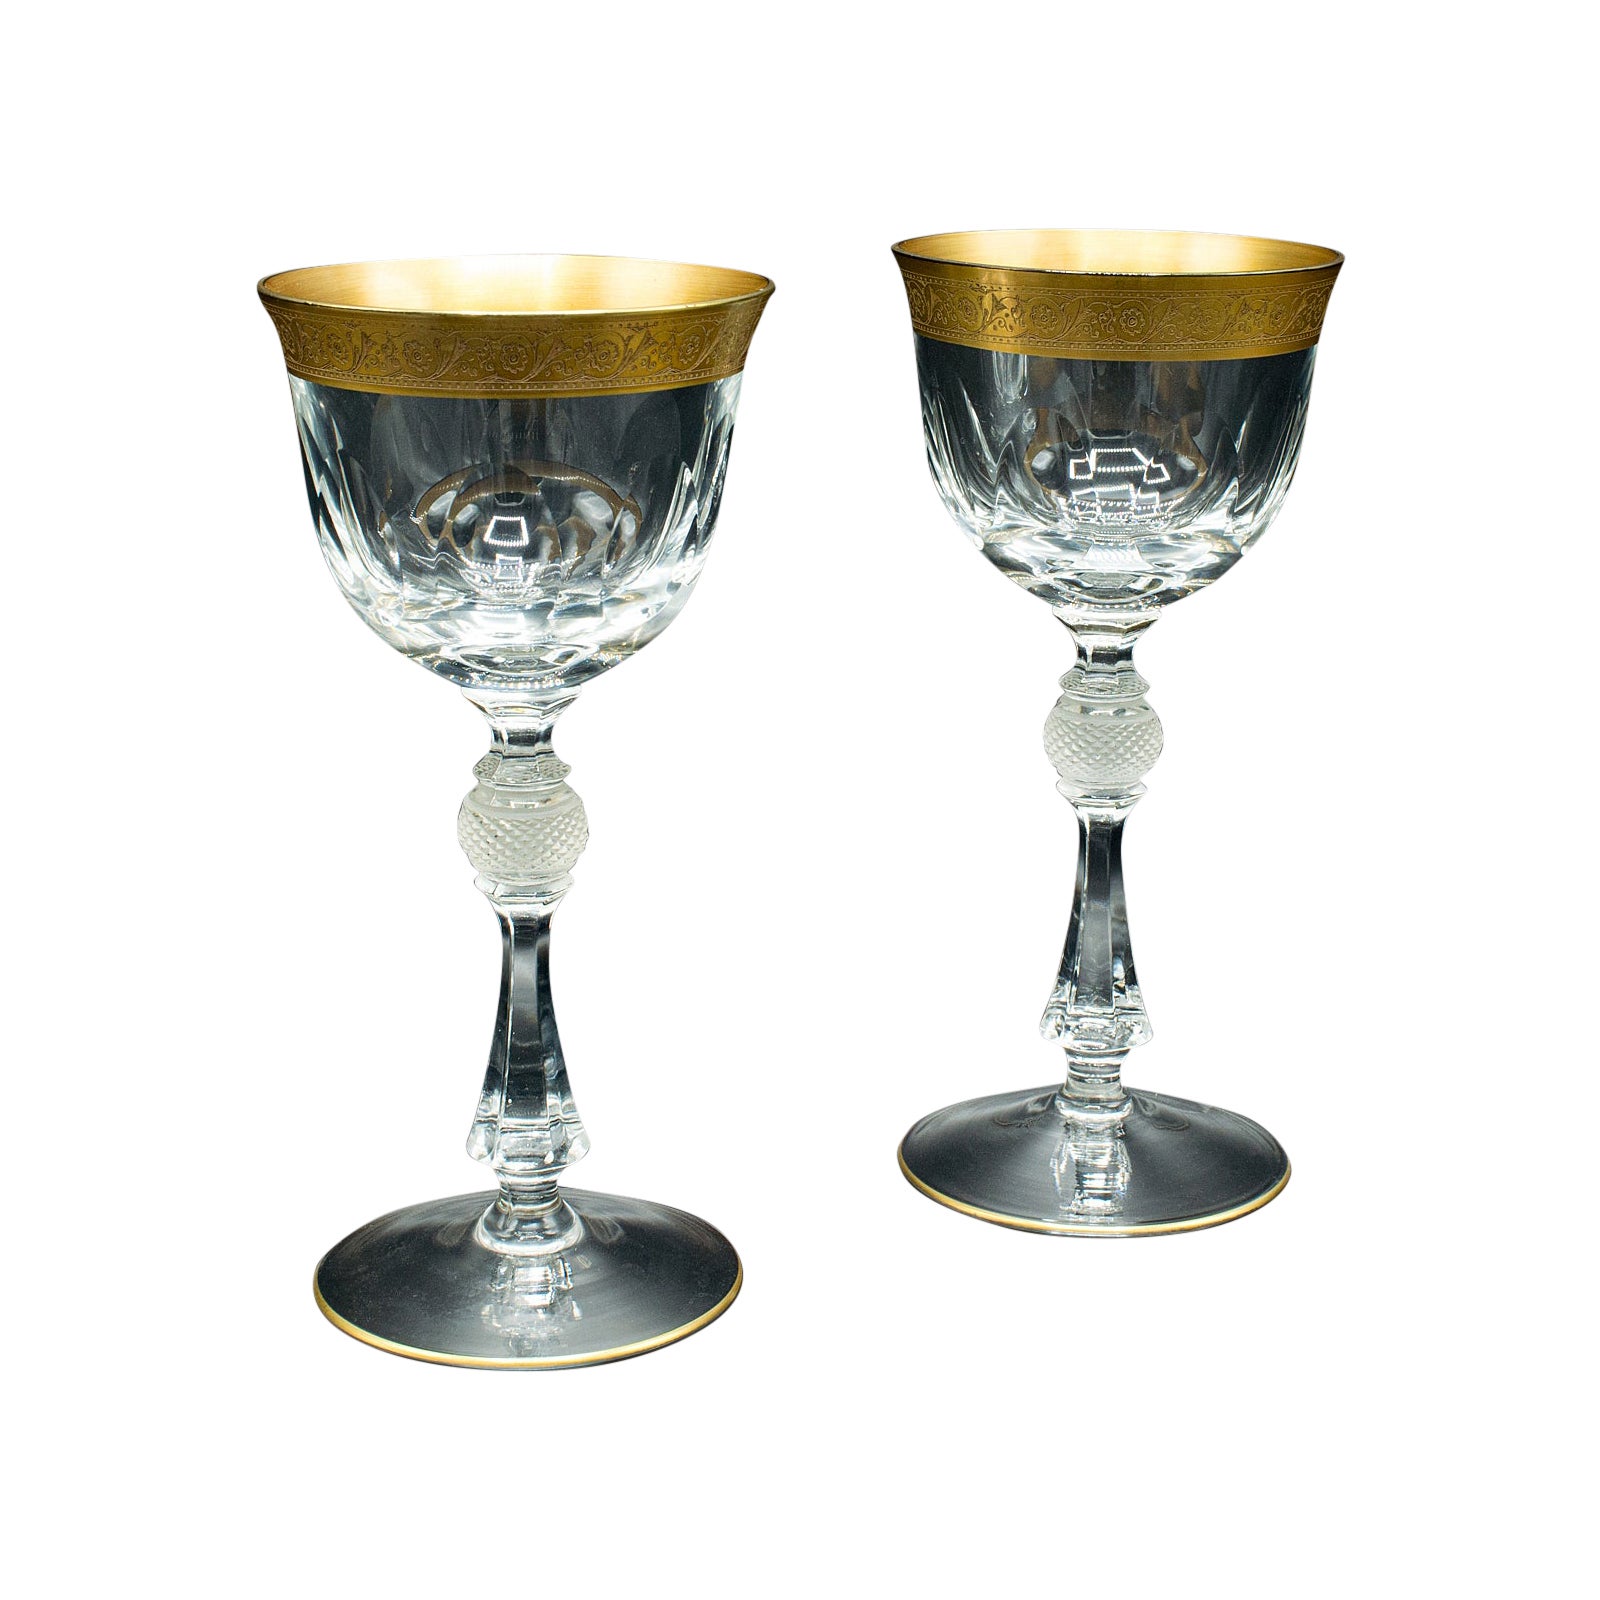 Pair of Antique Celebratory Port Glasses, French, Gilt, Stem Glass, Art Deco